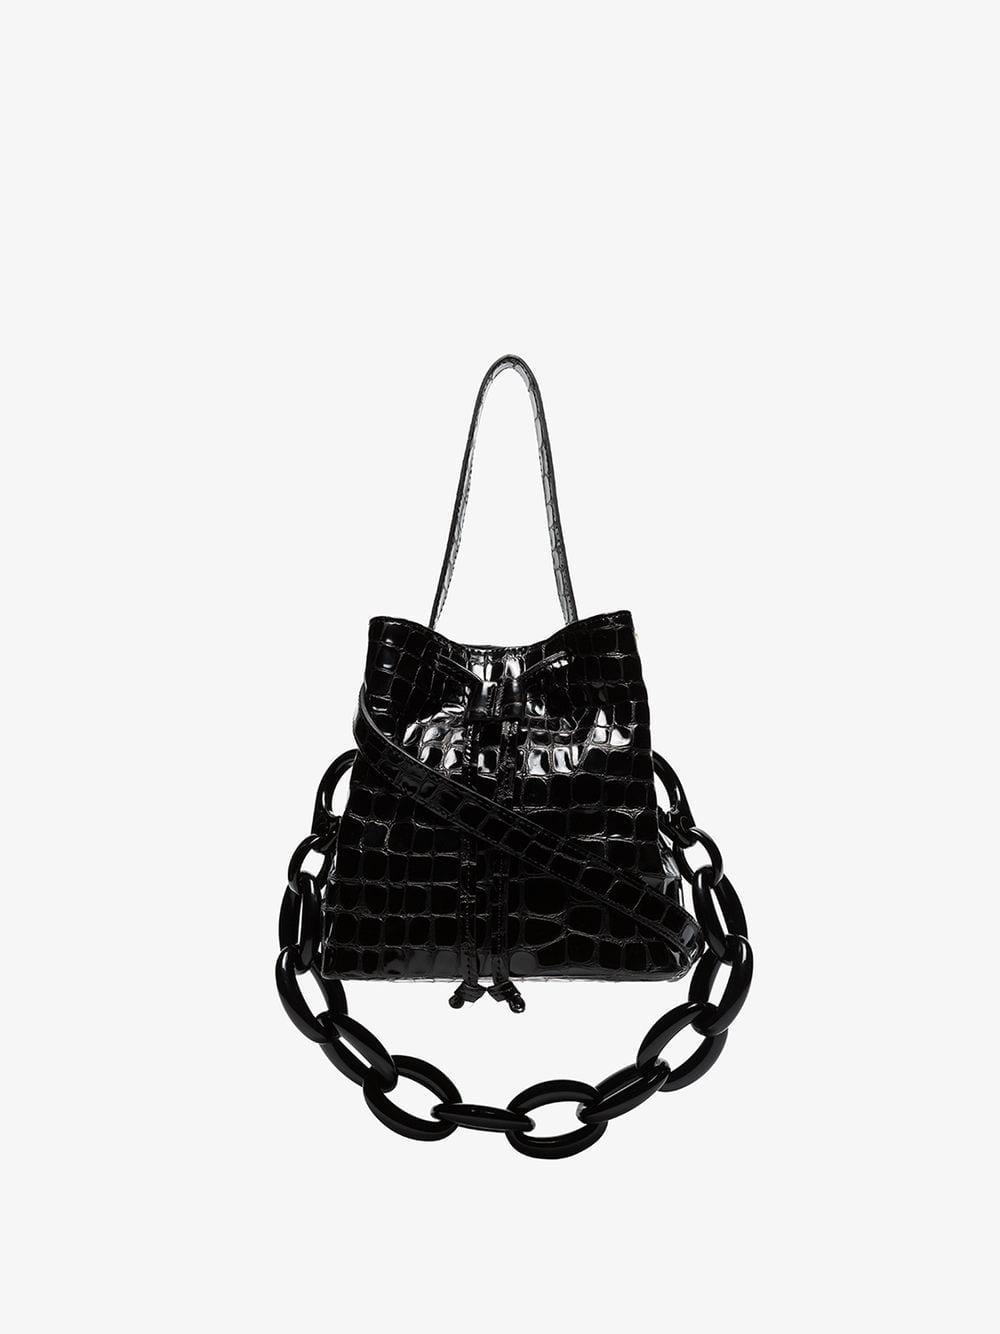 Tara Zadeh Lila Bucket Bag in Black - Save 8% - Lyst